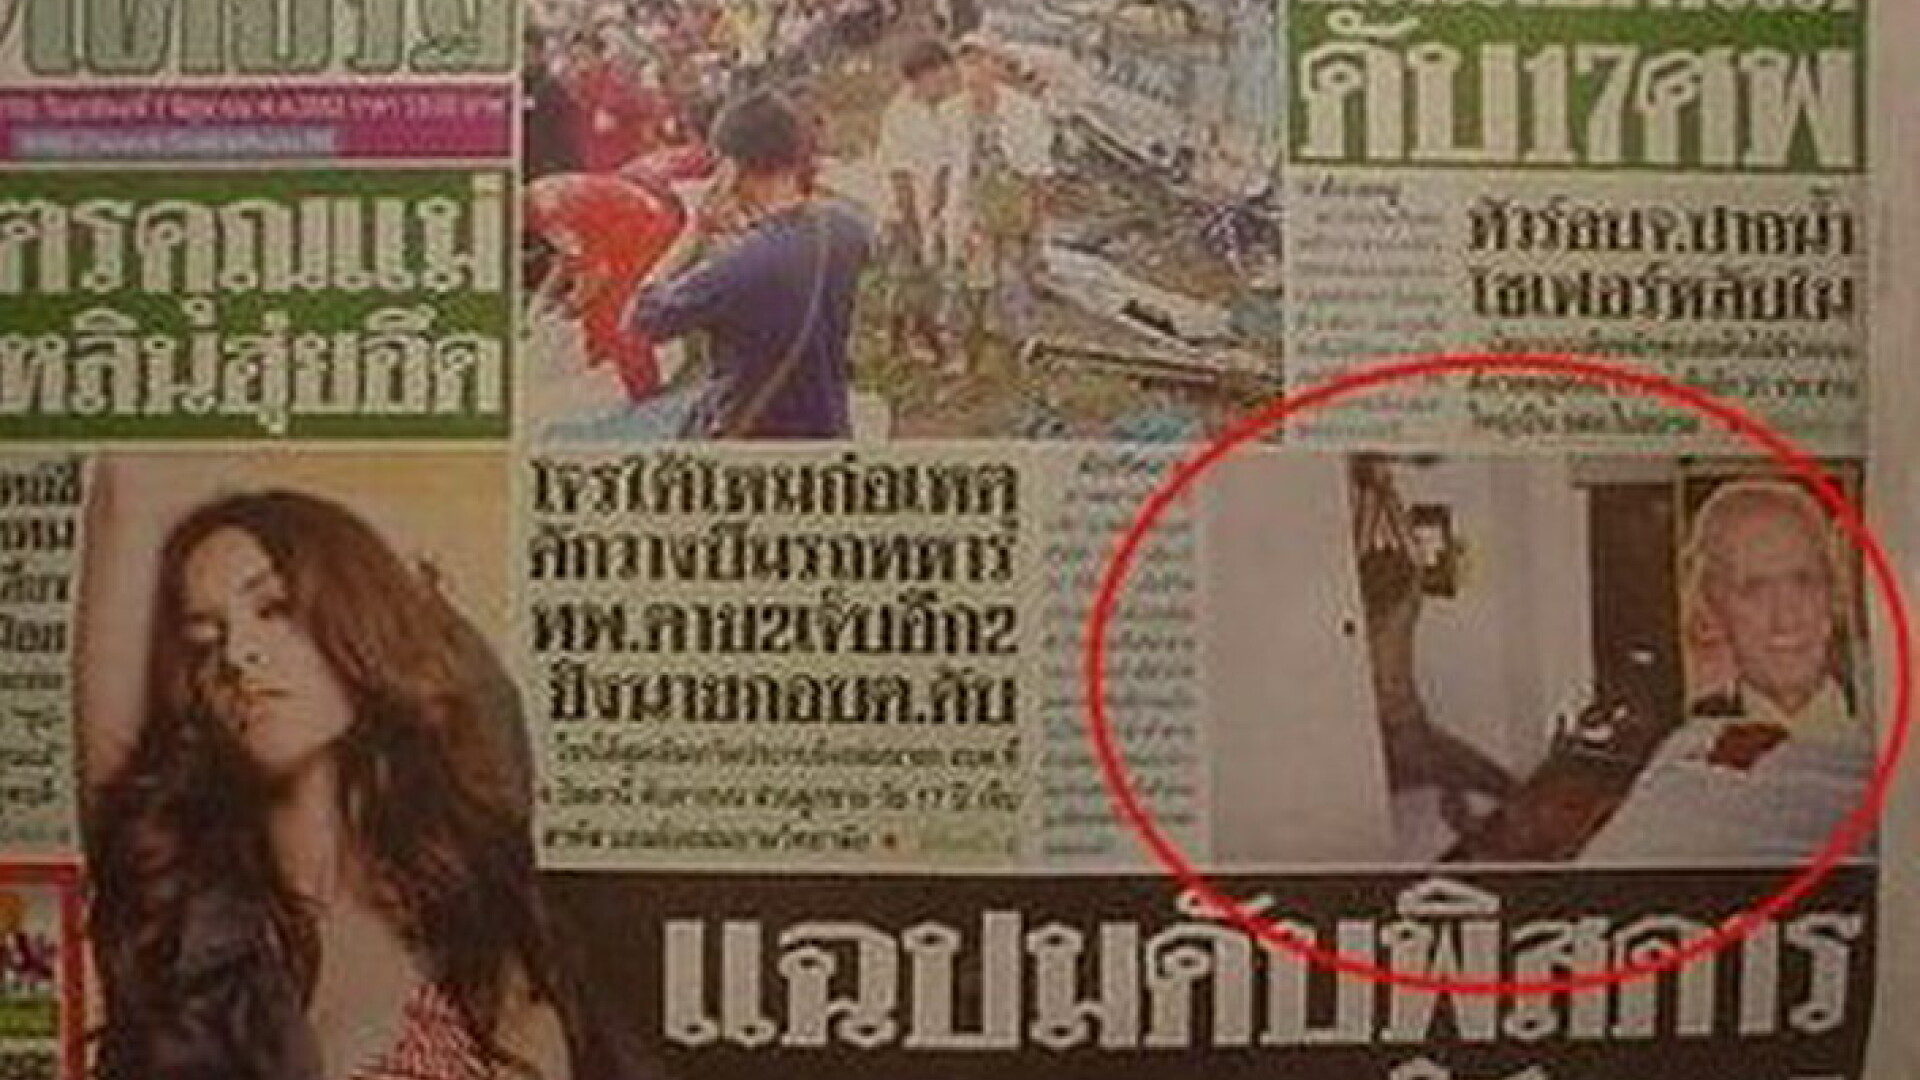 ziarul thailandez